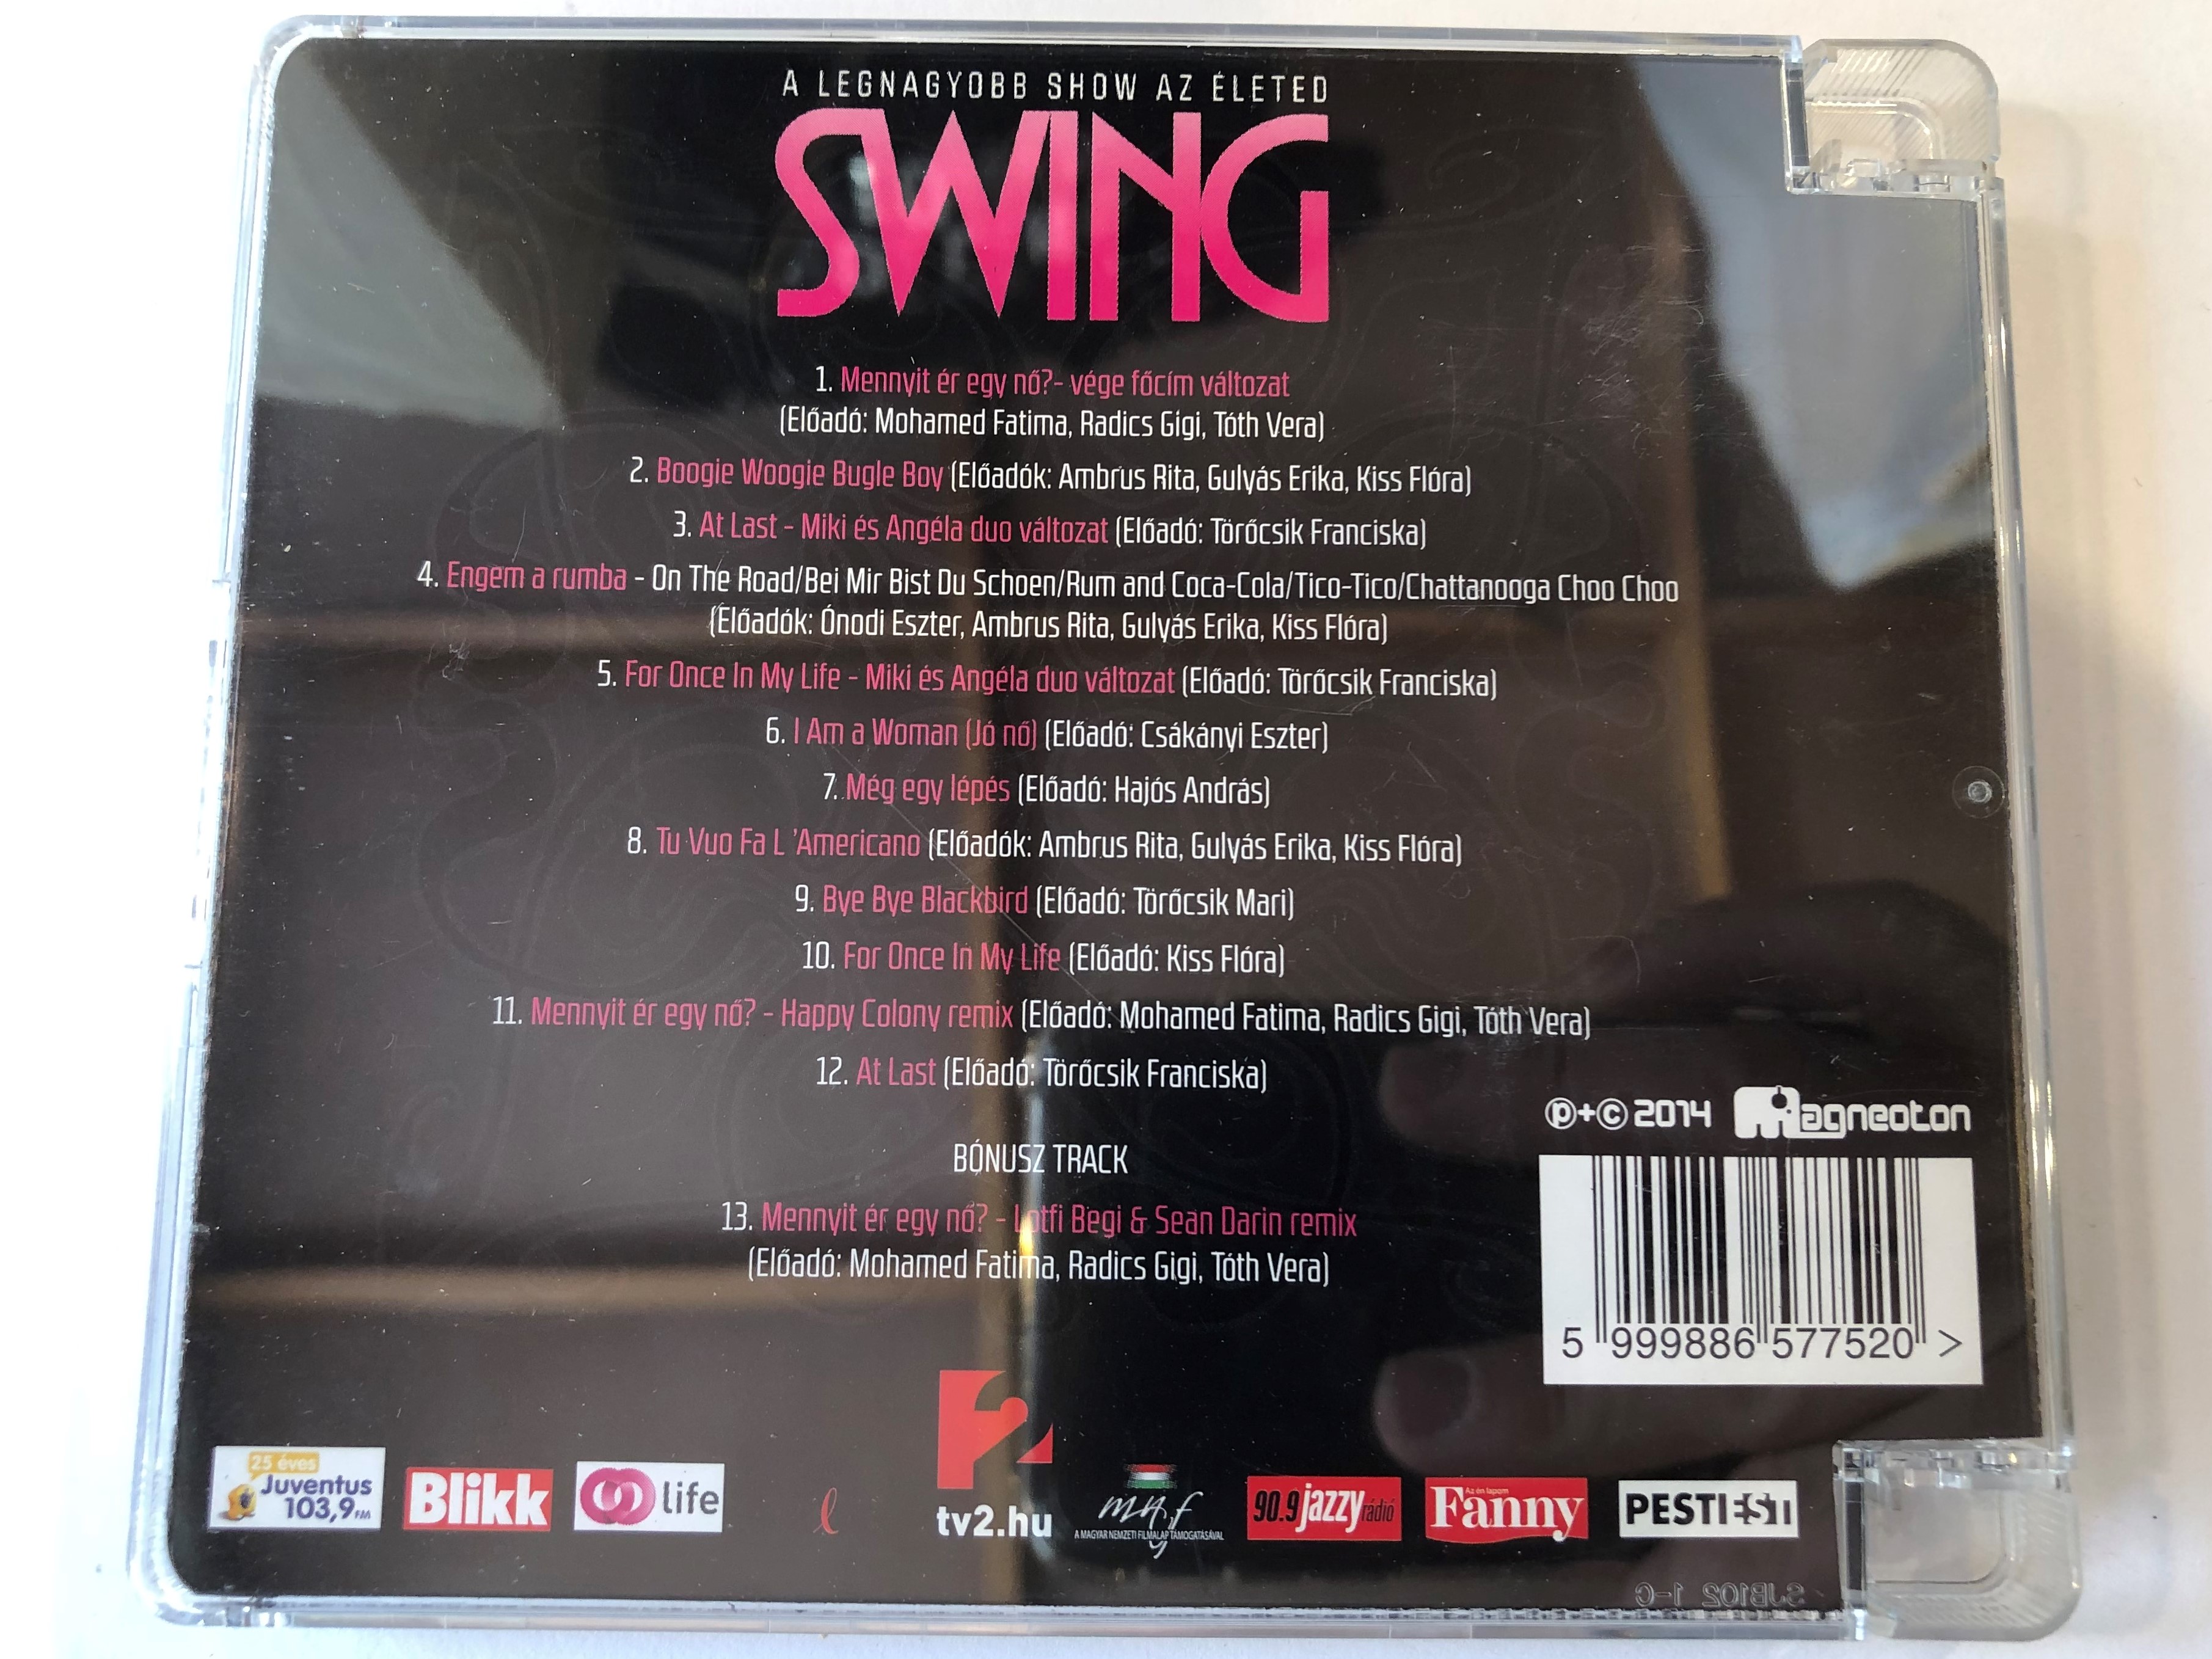 a-legnagyobb-show-az-leted-swing-magneoton-audio-cd-2014-5999886577520-4-.jpg